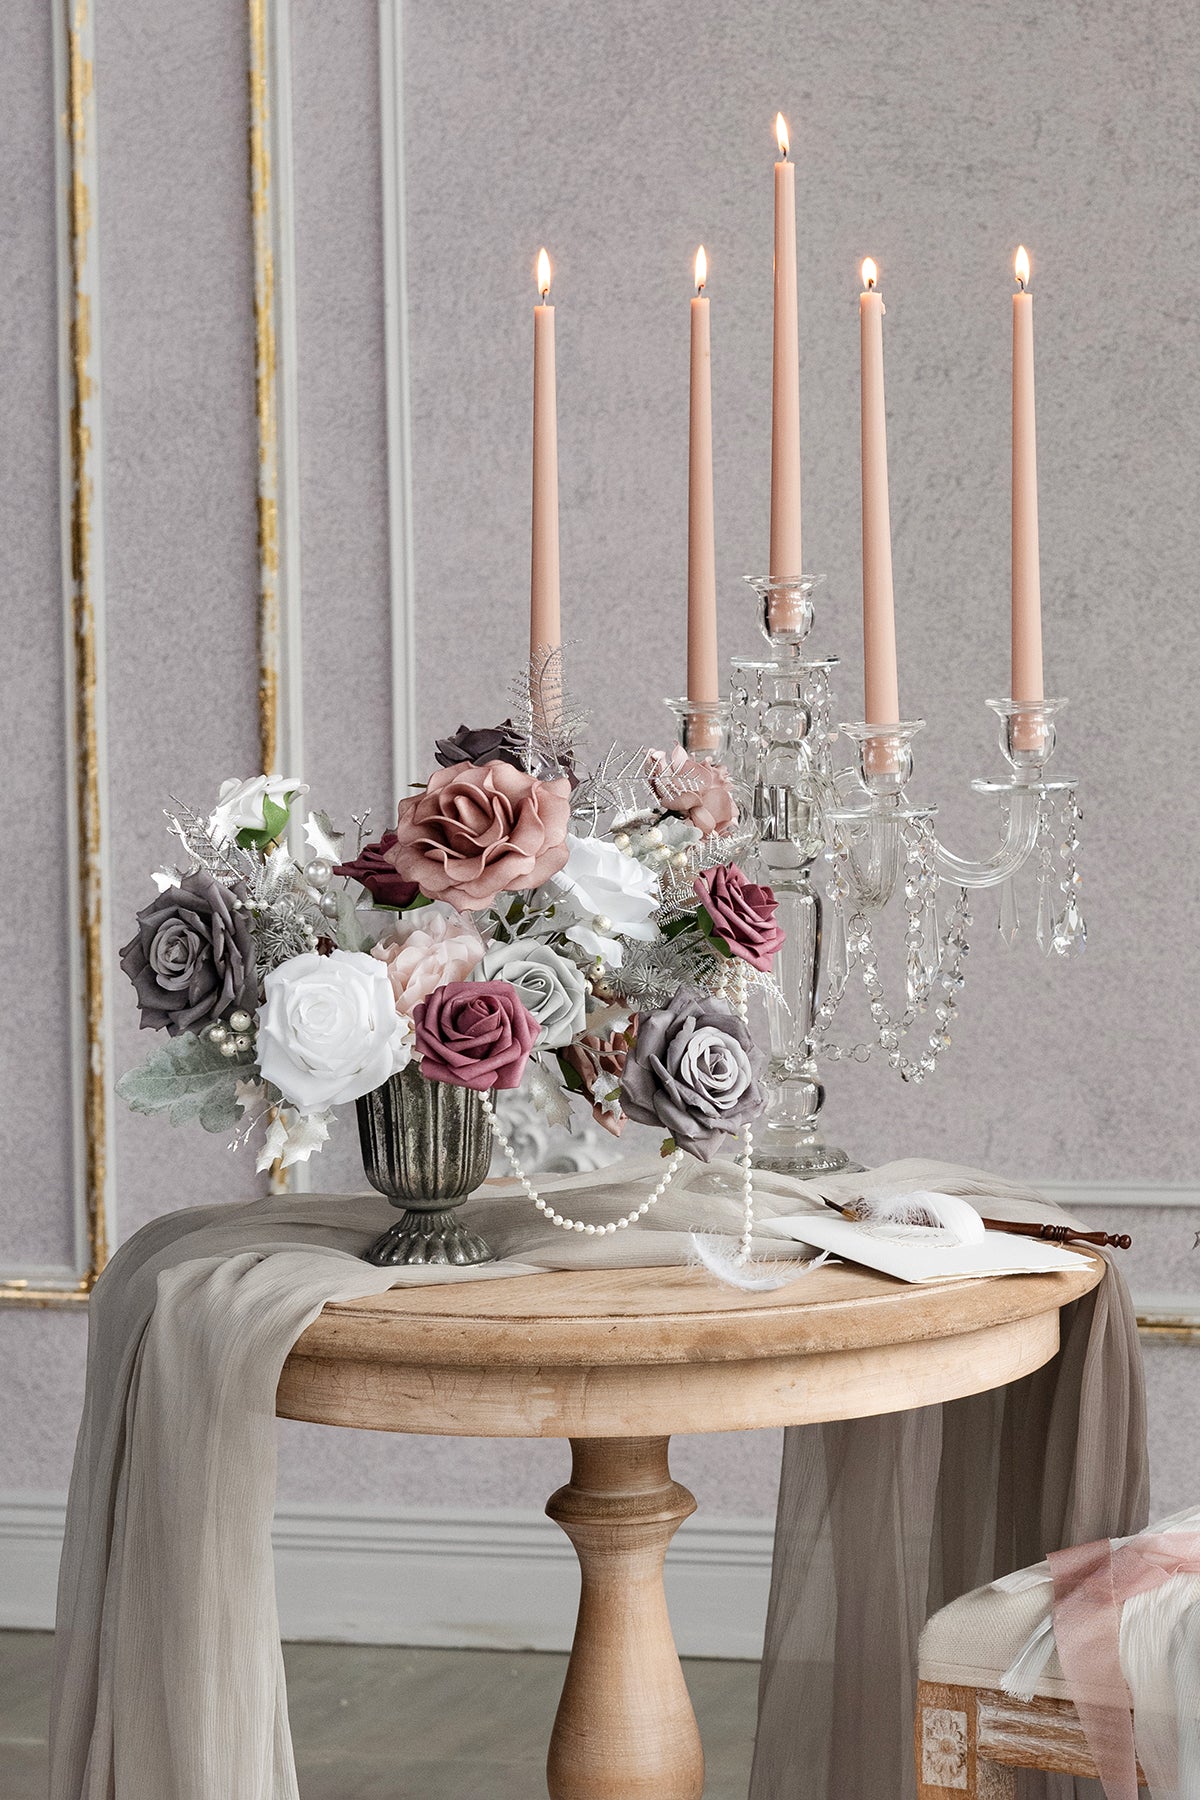 DIY Designer Flower Box in Dusky Rose & Silver